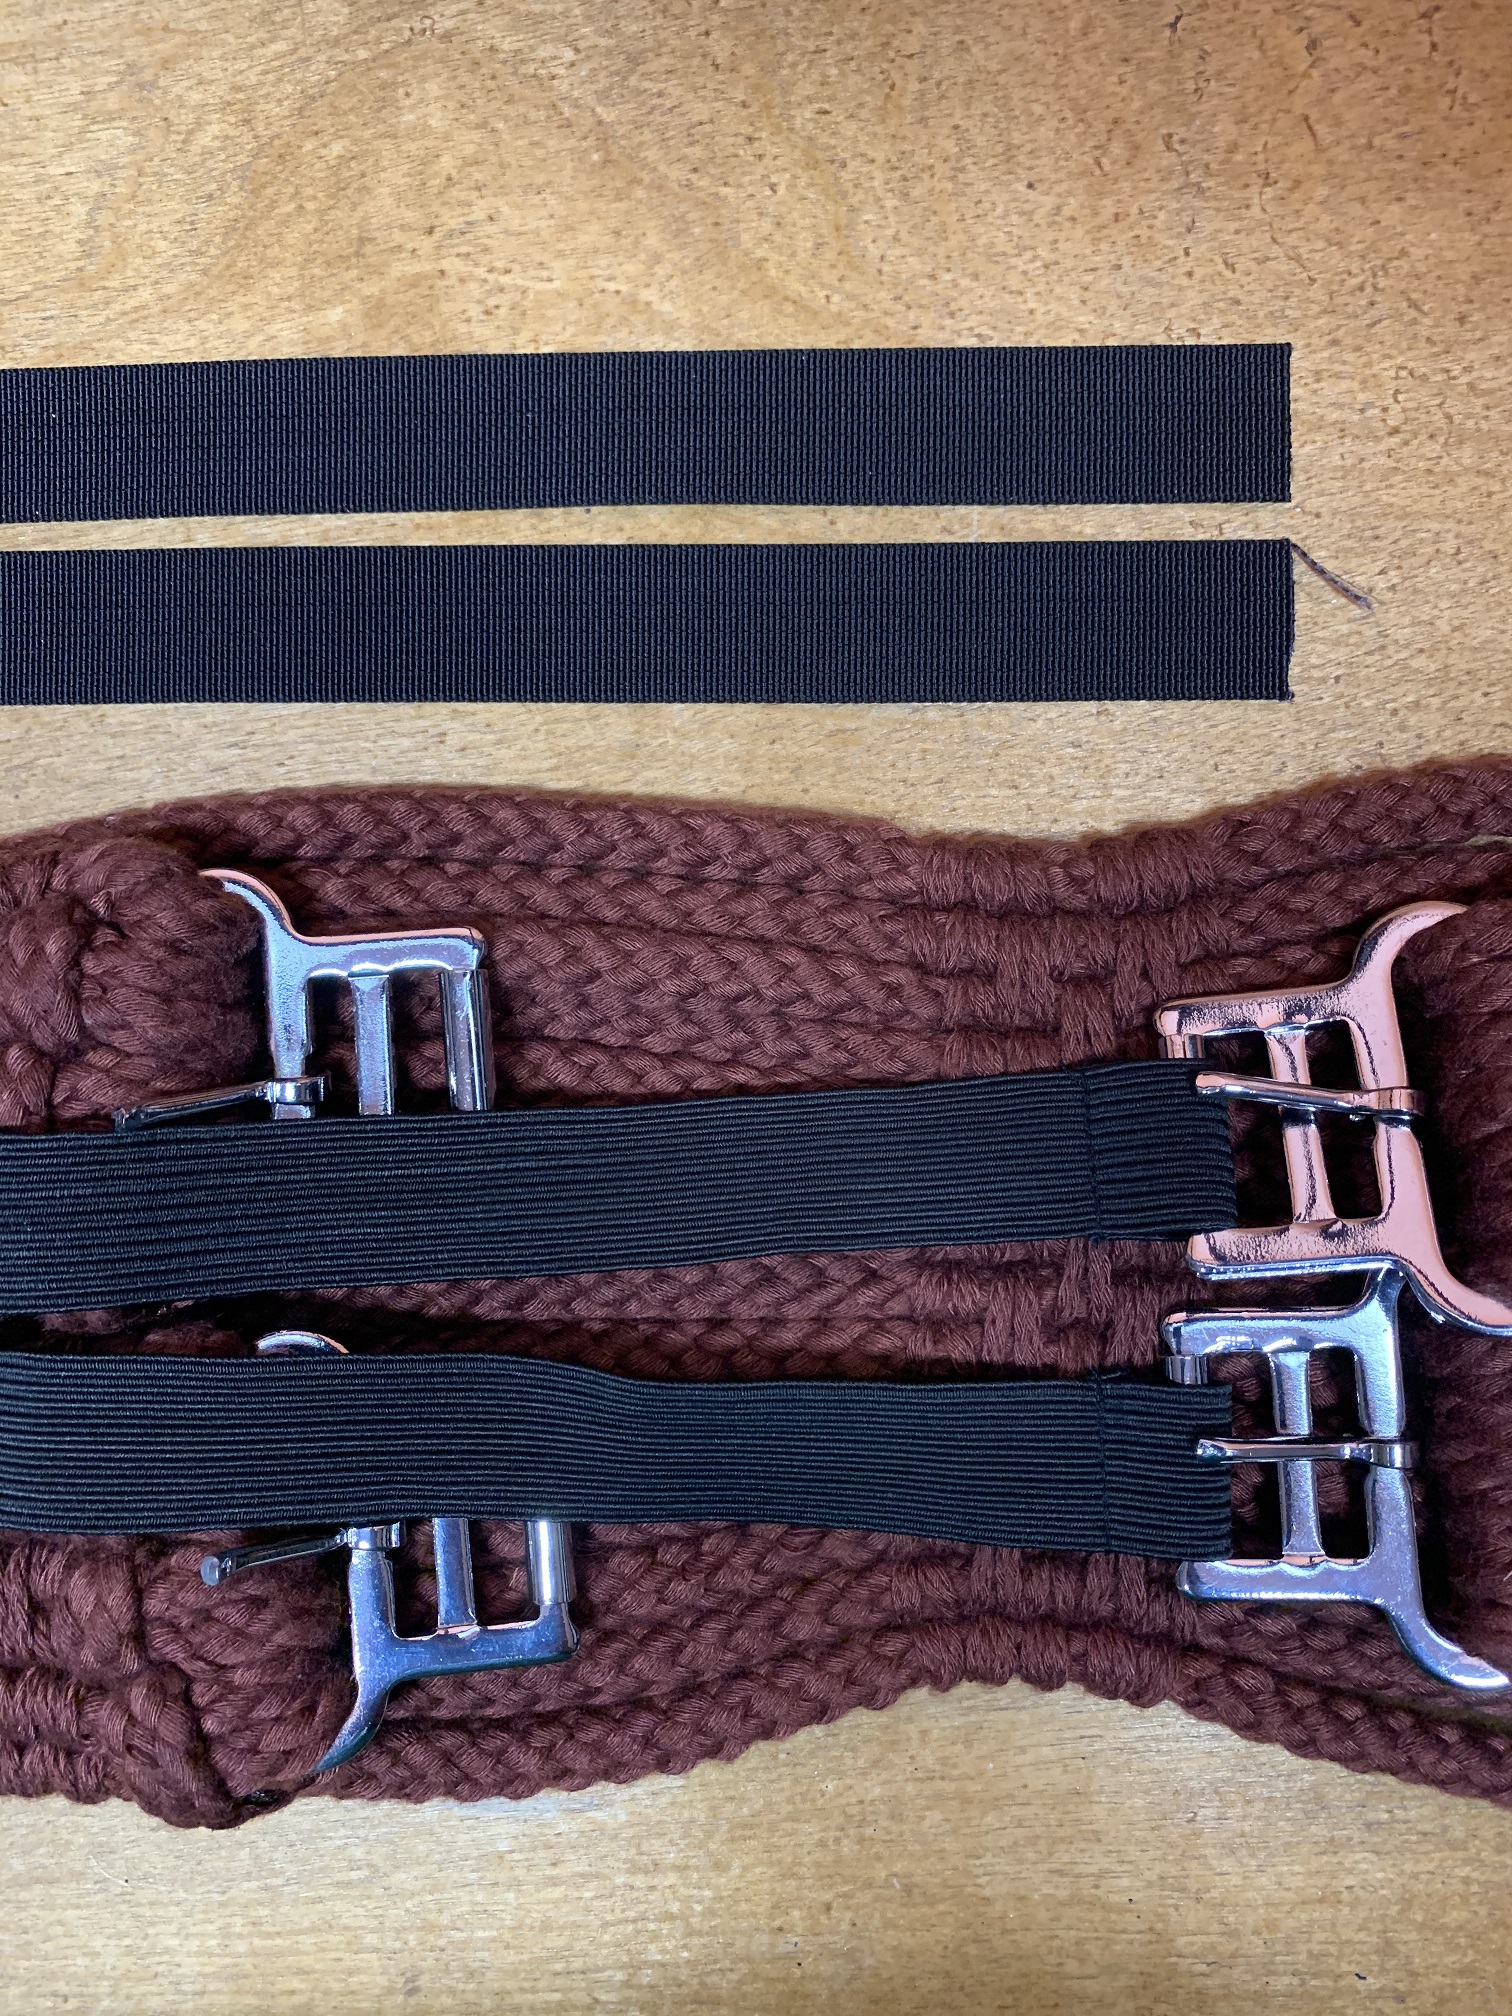 Elastic Straps Comparison to Fabric Straps.jpg